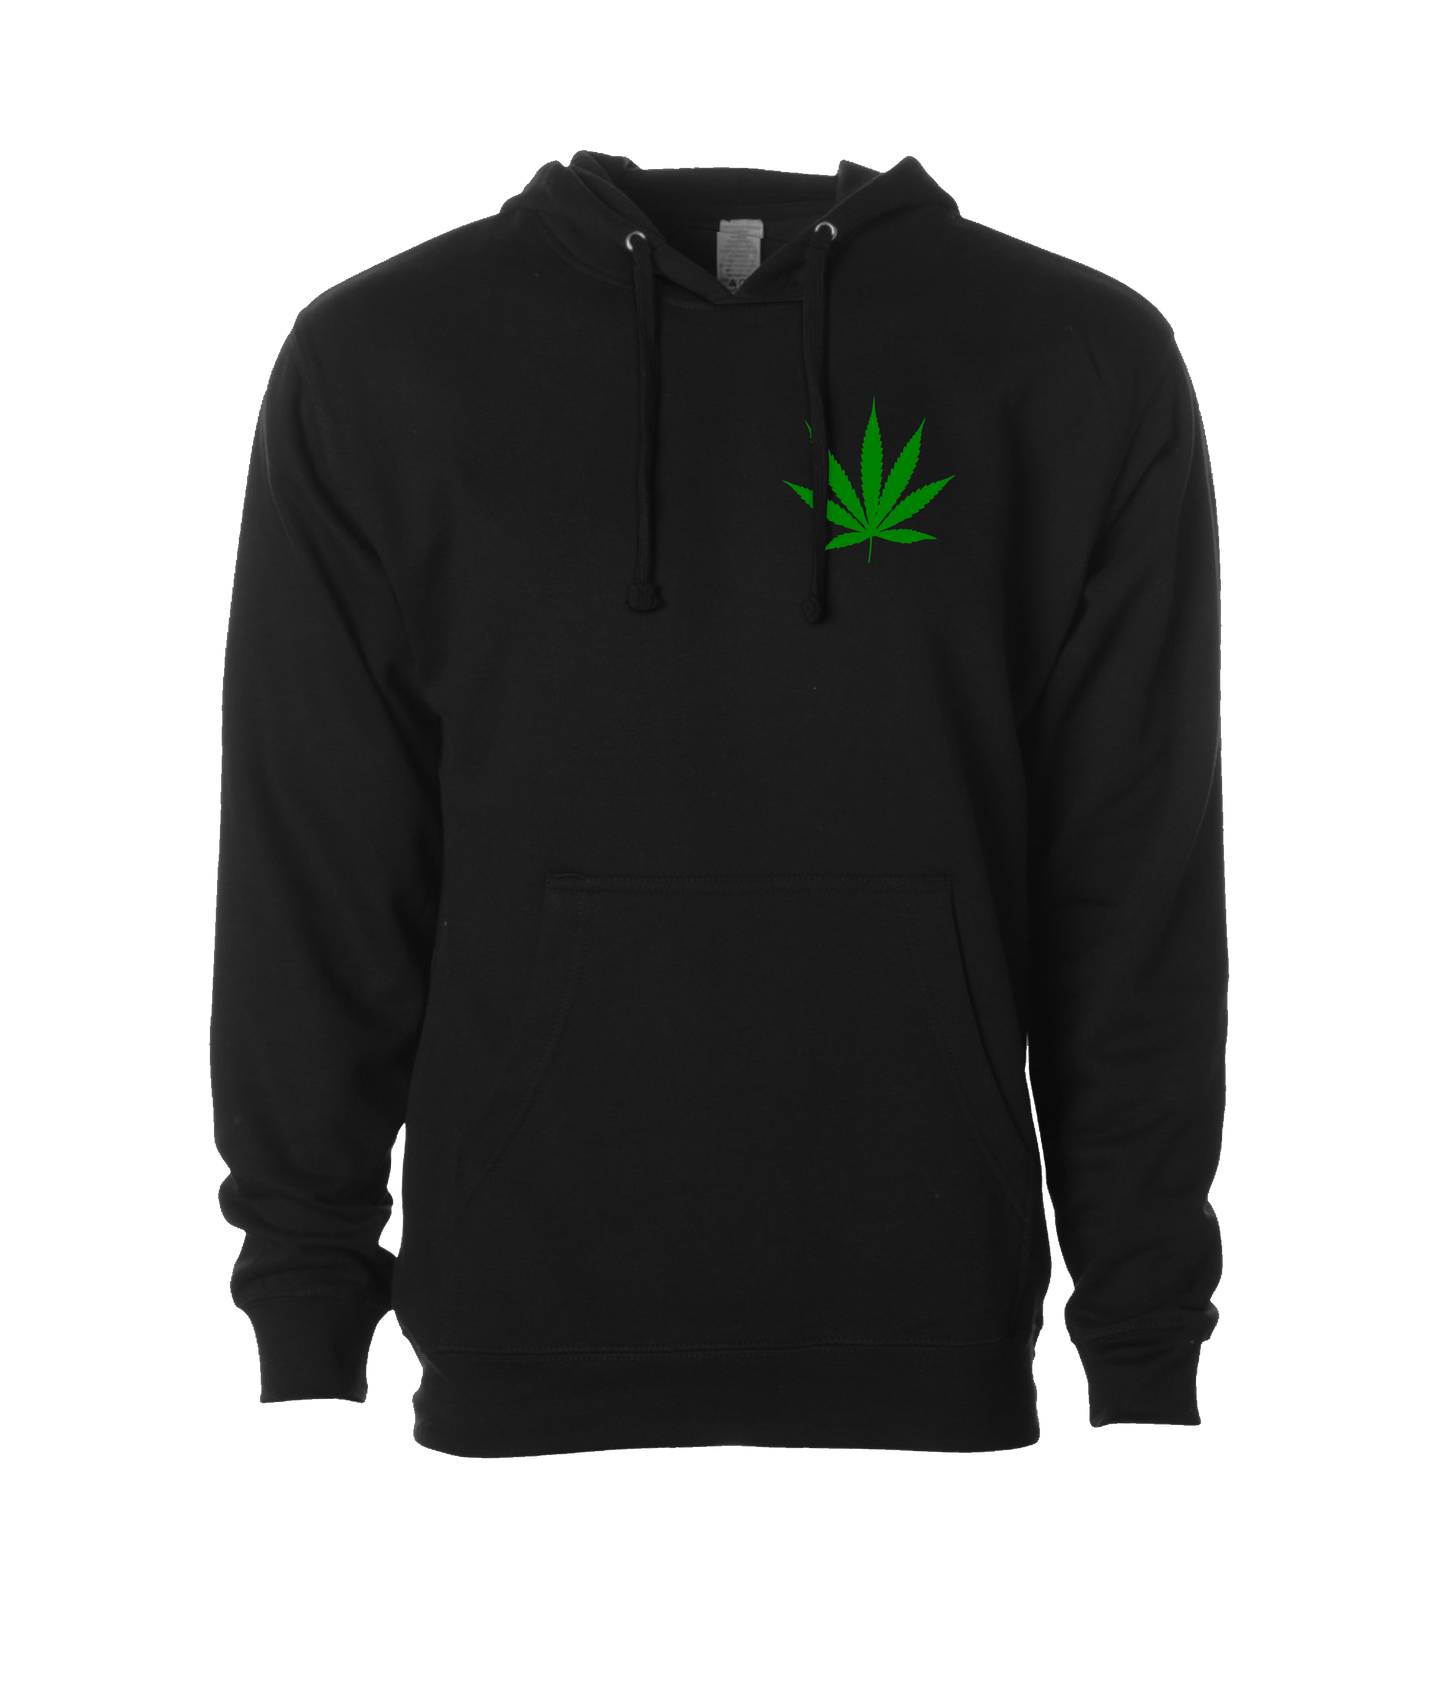 4evaGood - Cannabis Leaf - Black Hoodie